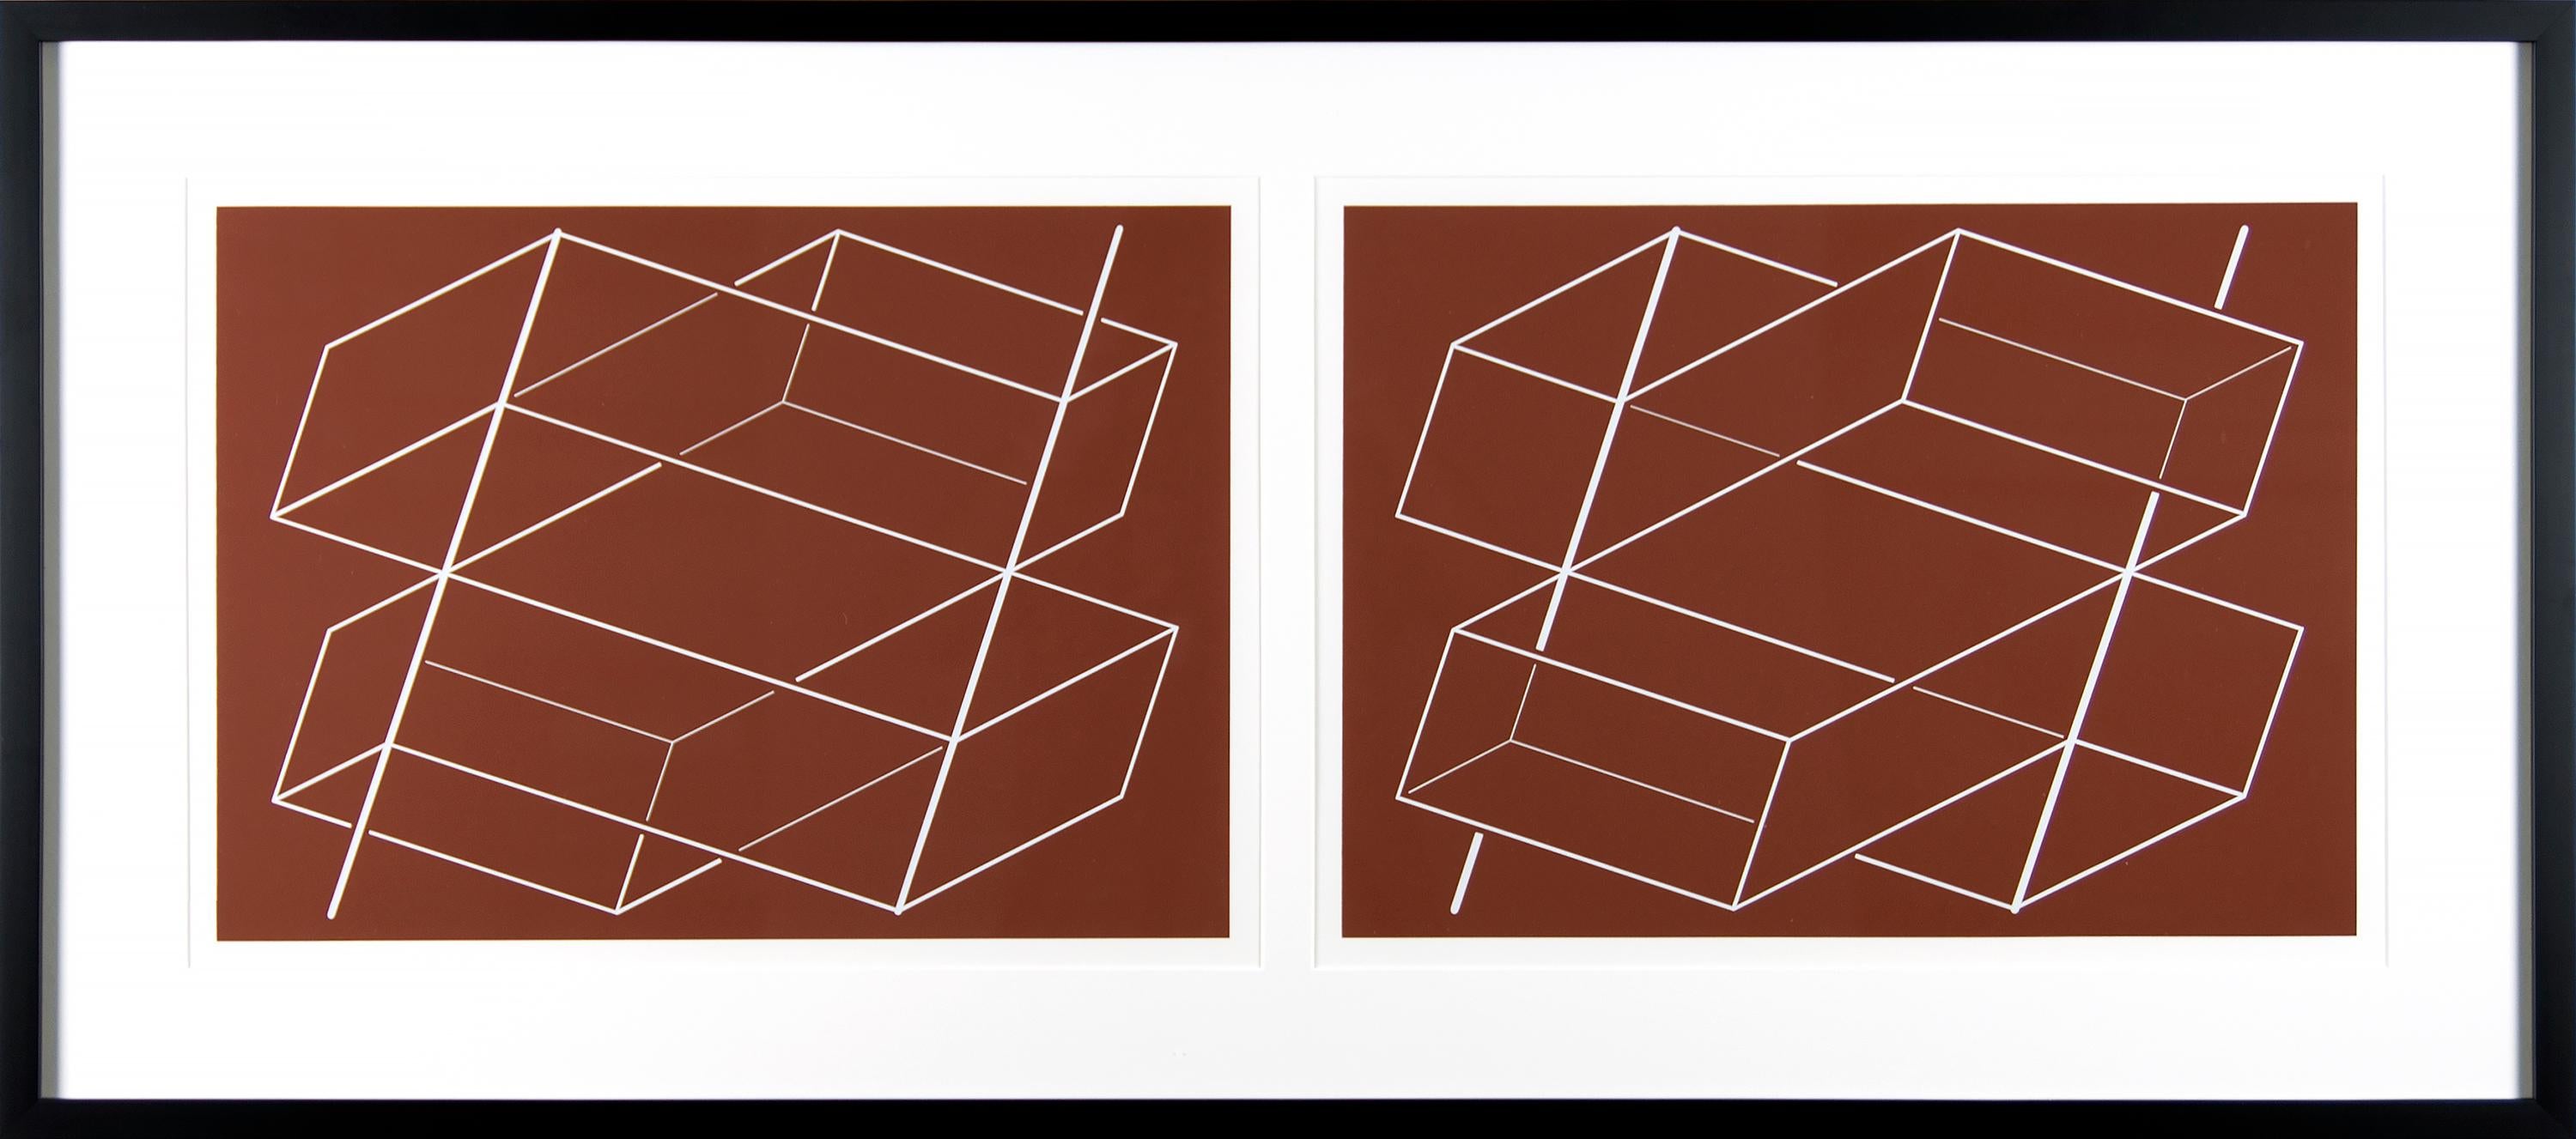 Sans titre de la formulation : Articulation - Print de Josef Albers